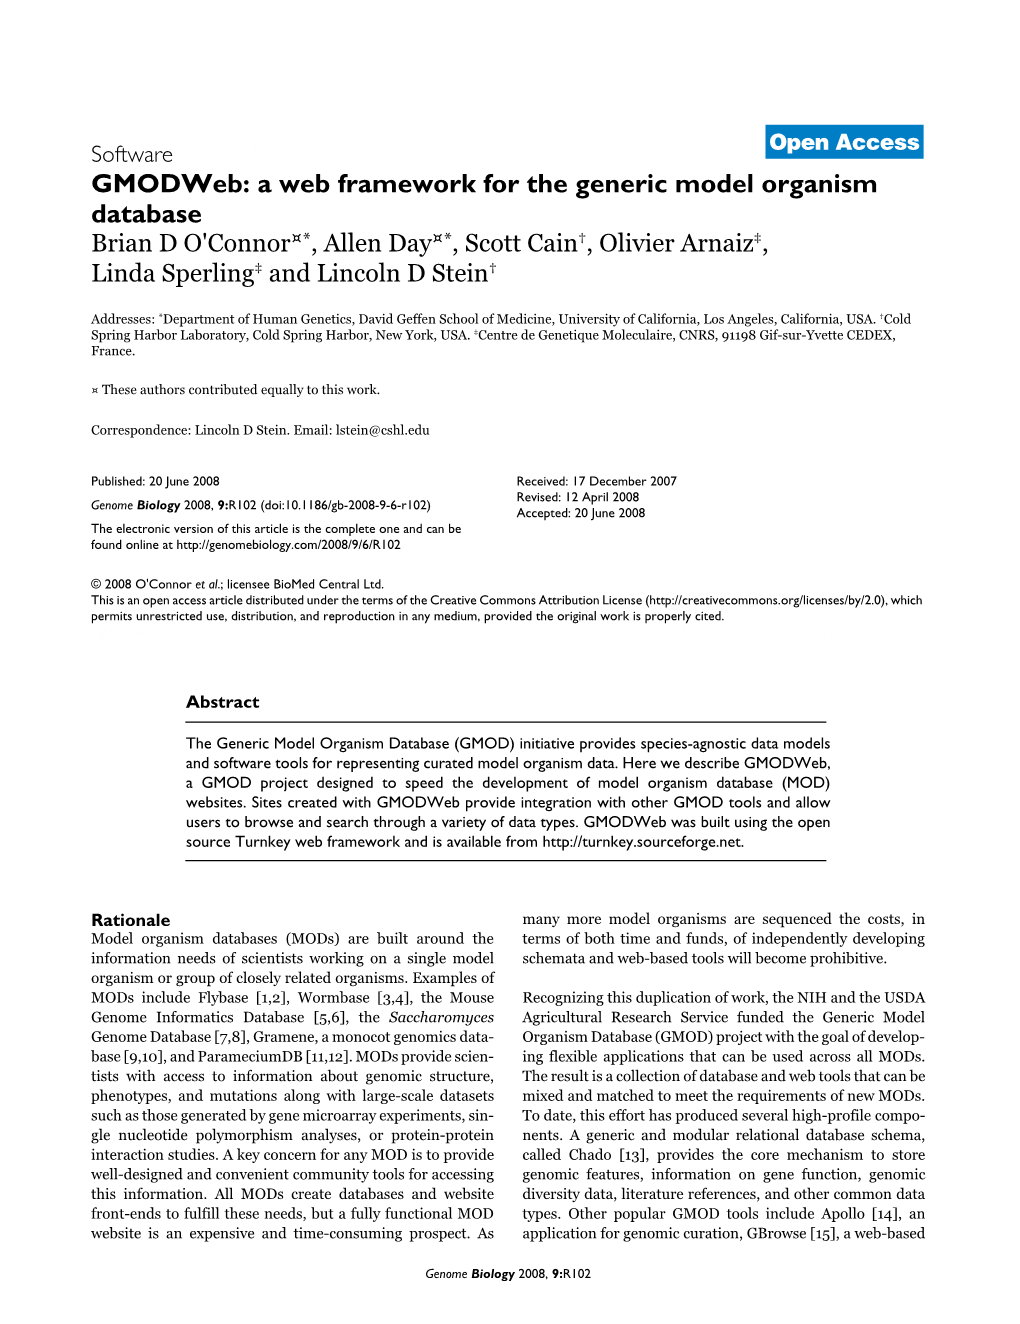 Gmodweb: a Web Framework for the Generic Model Organism Database Brian D O'connor¤*, Allen Day¤*, Scott Cain†, Olivier Arnaiz‡, Linda Sperling‡ and Lincoln D Stein†